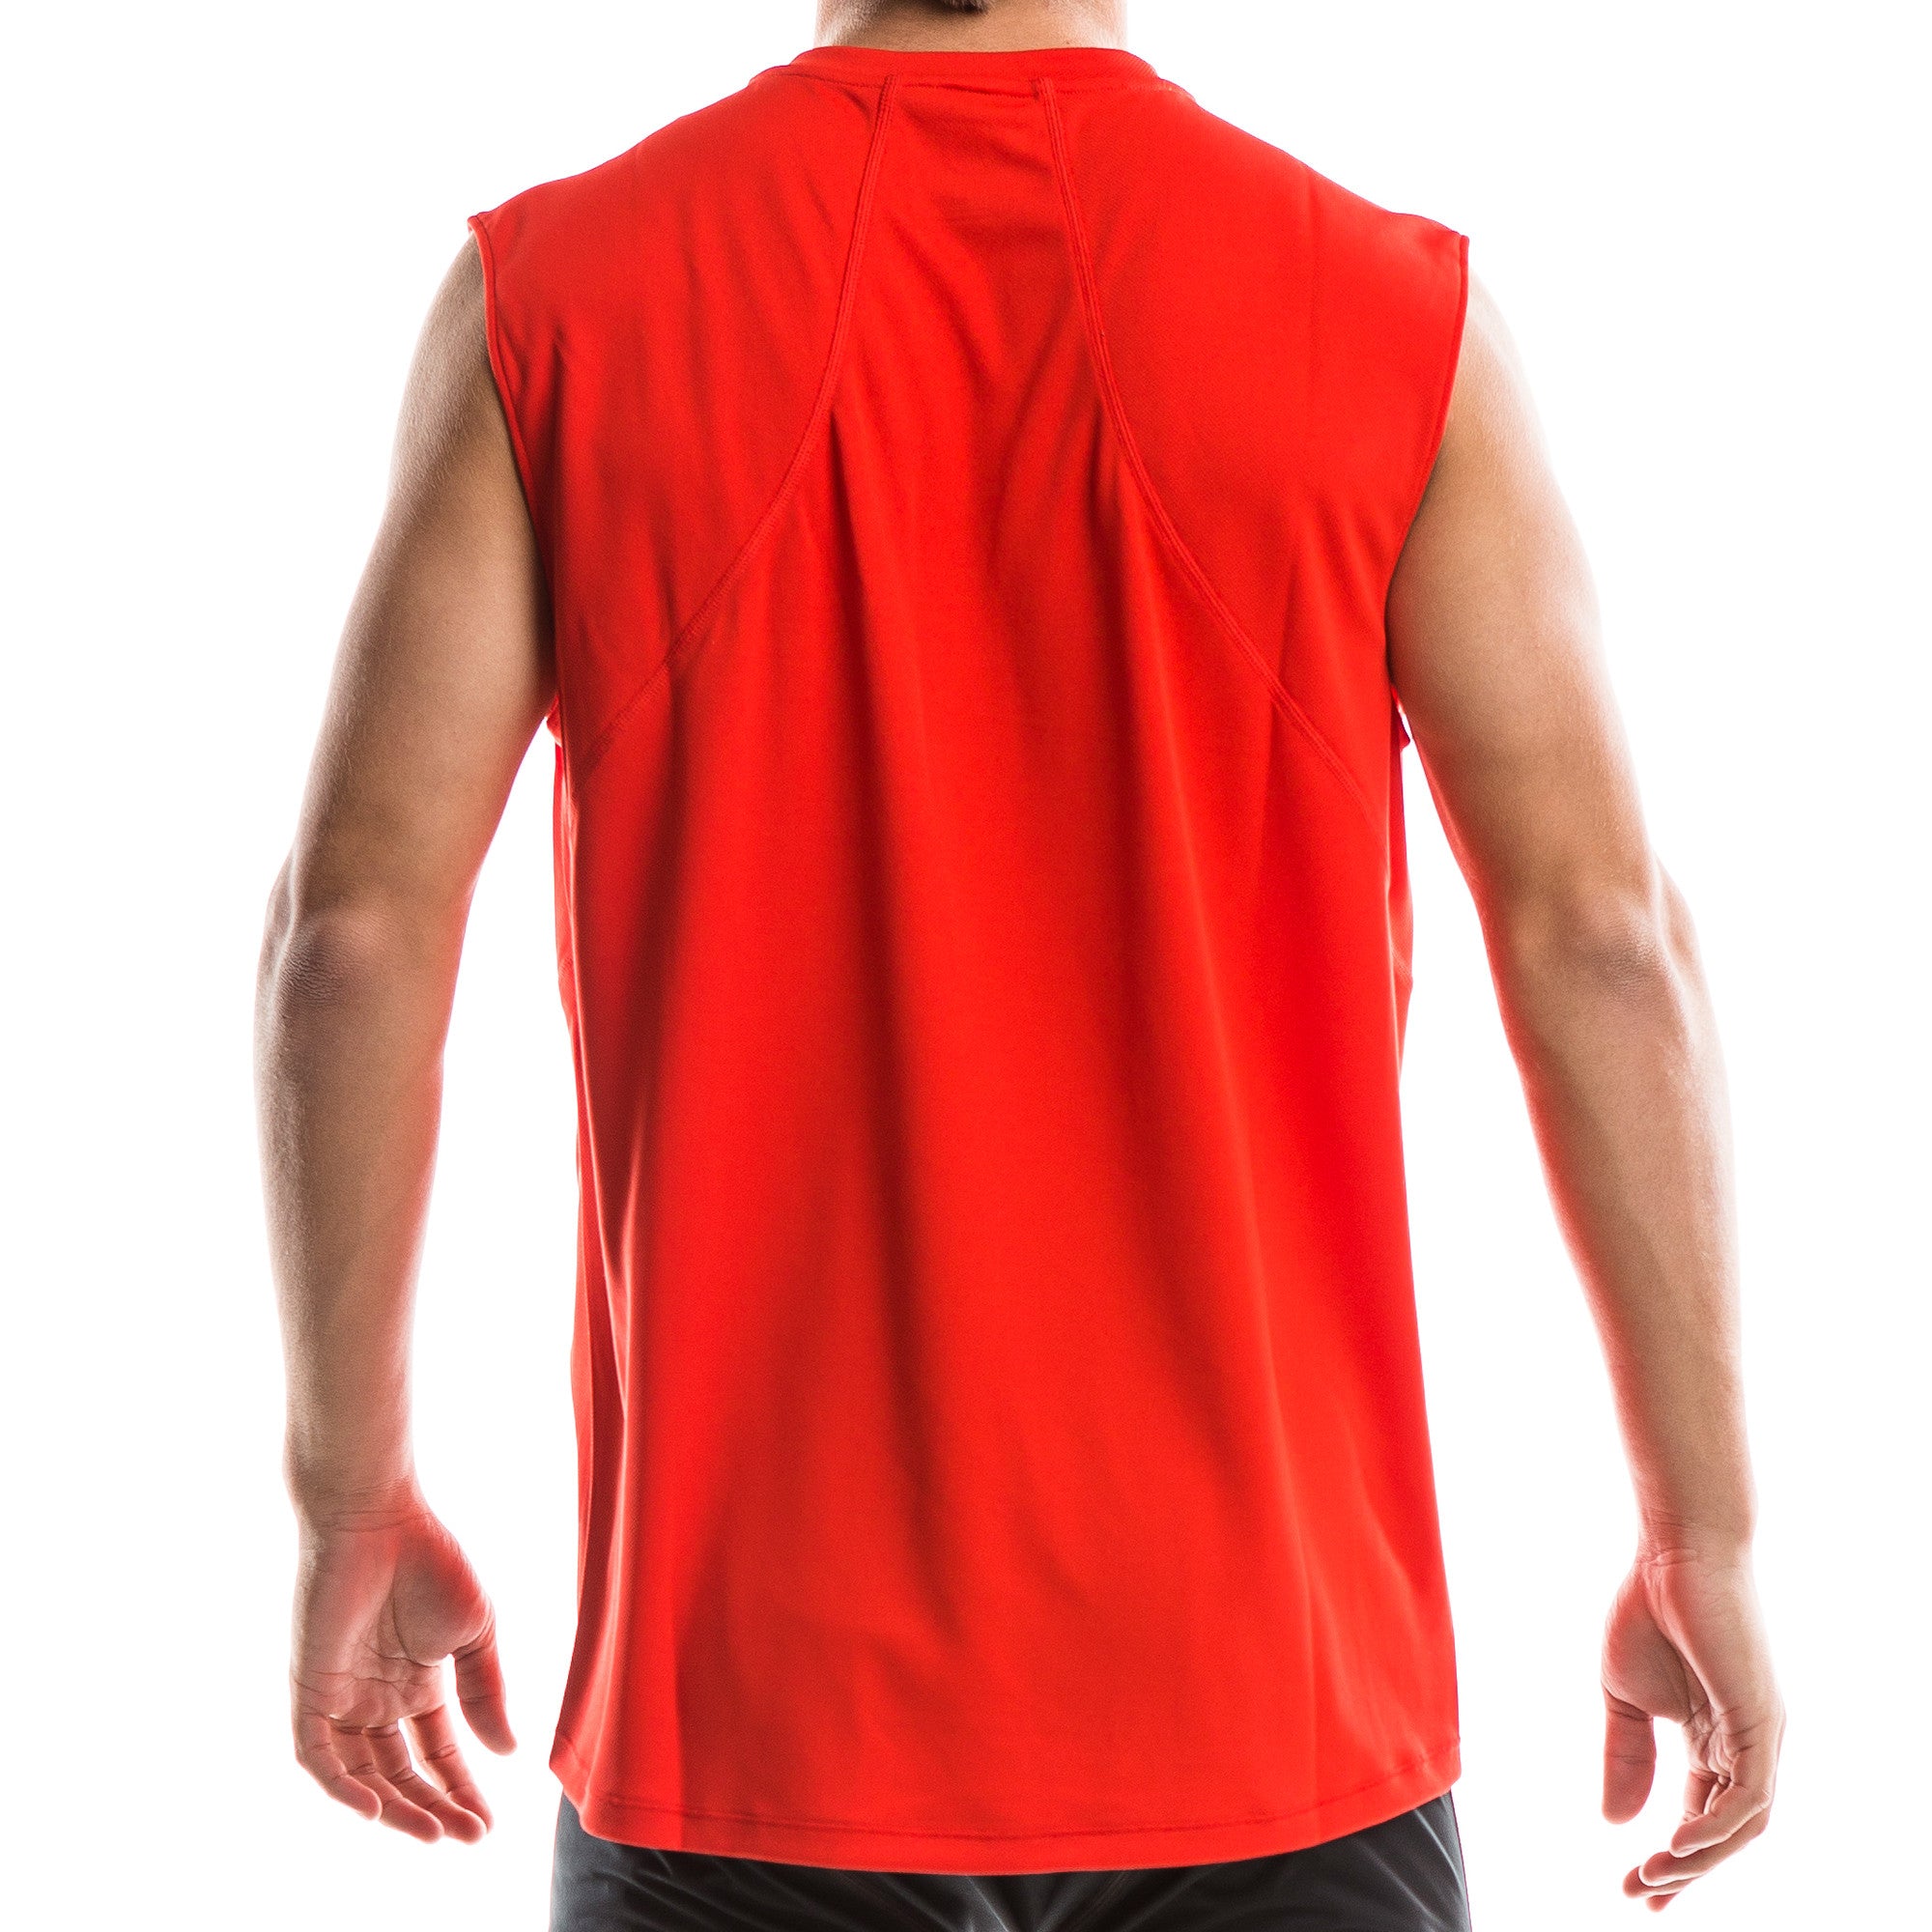 Active Sportswear - Men's Chalk Sleeveless Shirt